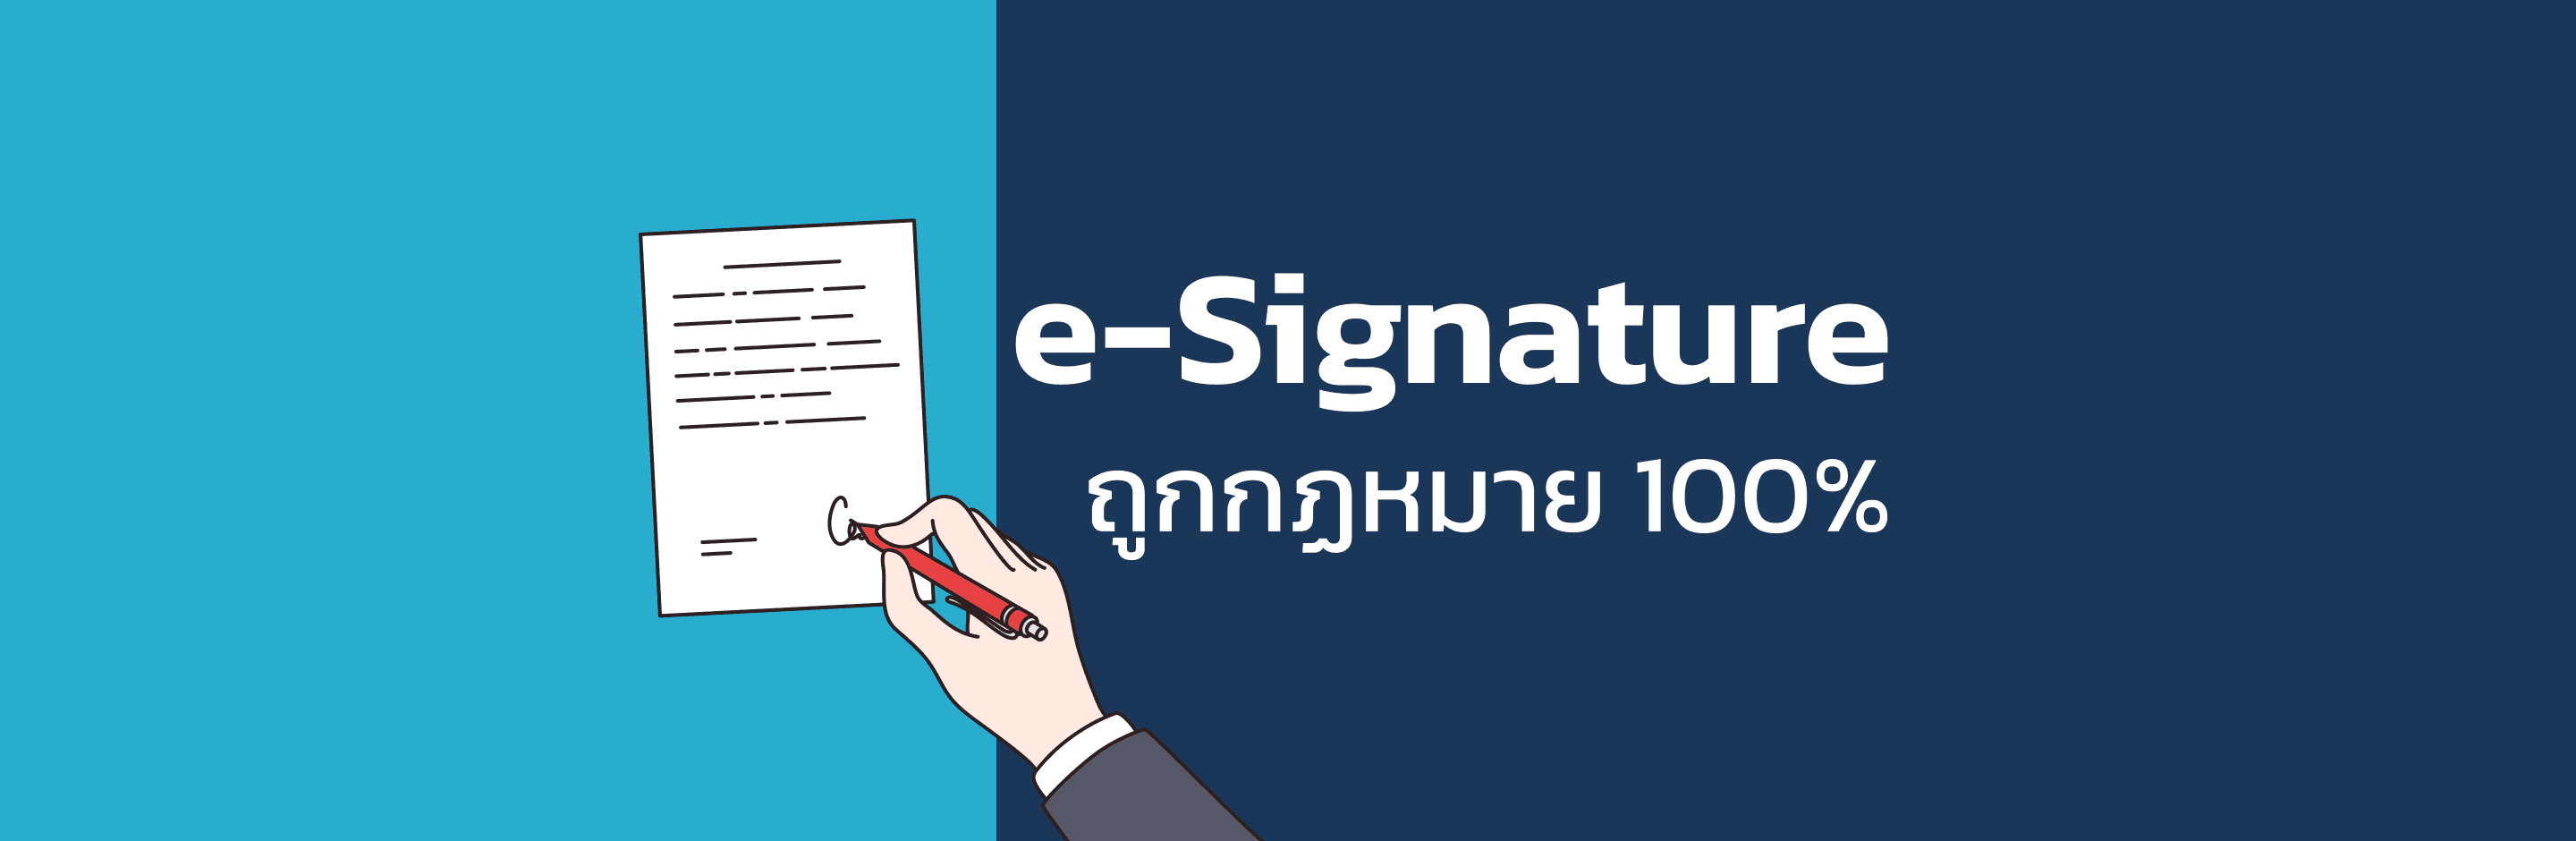 e-Signature เซ็นเอกสารสัญญาดิจิทัล แบบถูกกฎหมาย 100% 